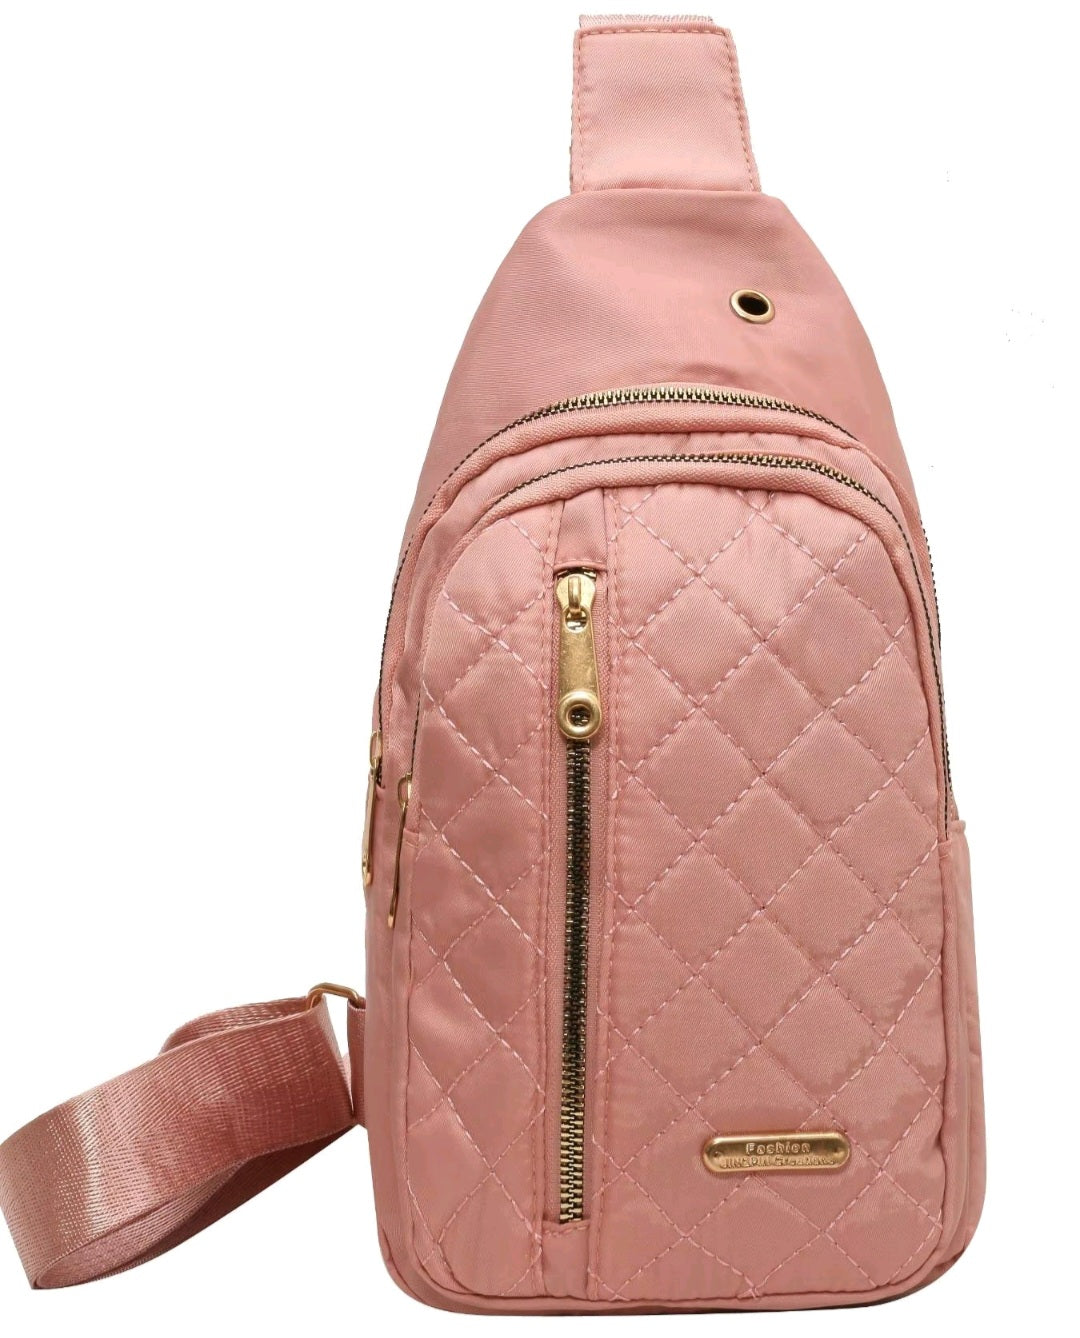 Pretty in Pink Crossbody Bag